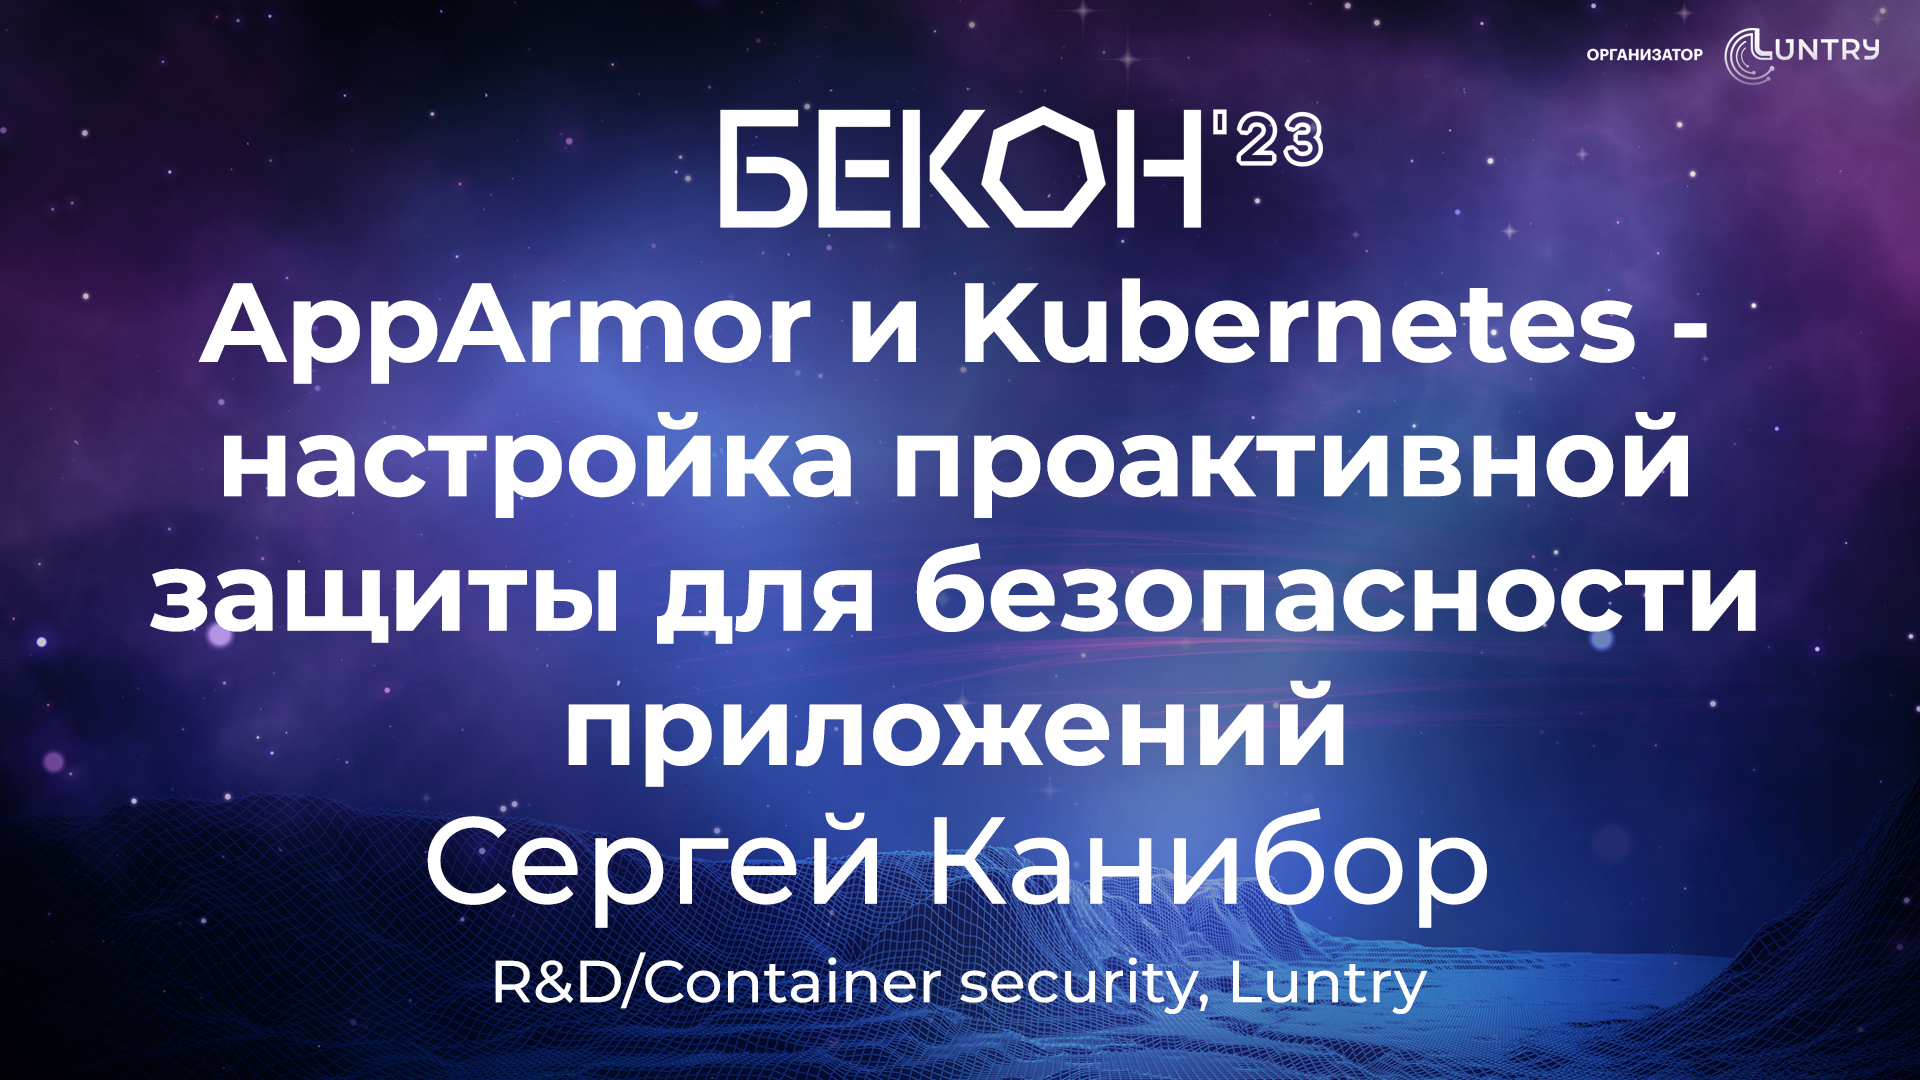 Доклад “AppArmor и Kubernetes: проактивная защита для безопасности приложений”, конференция БеКон